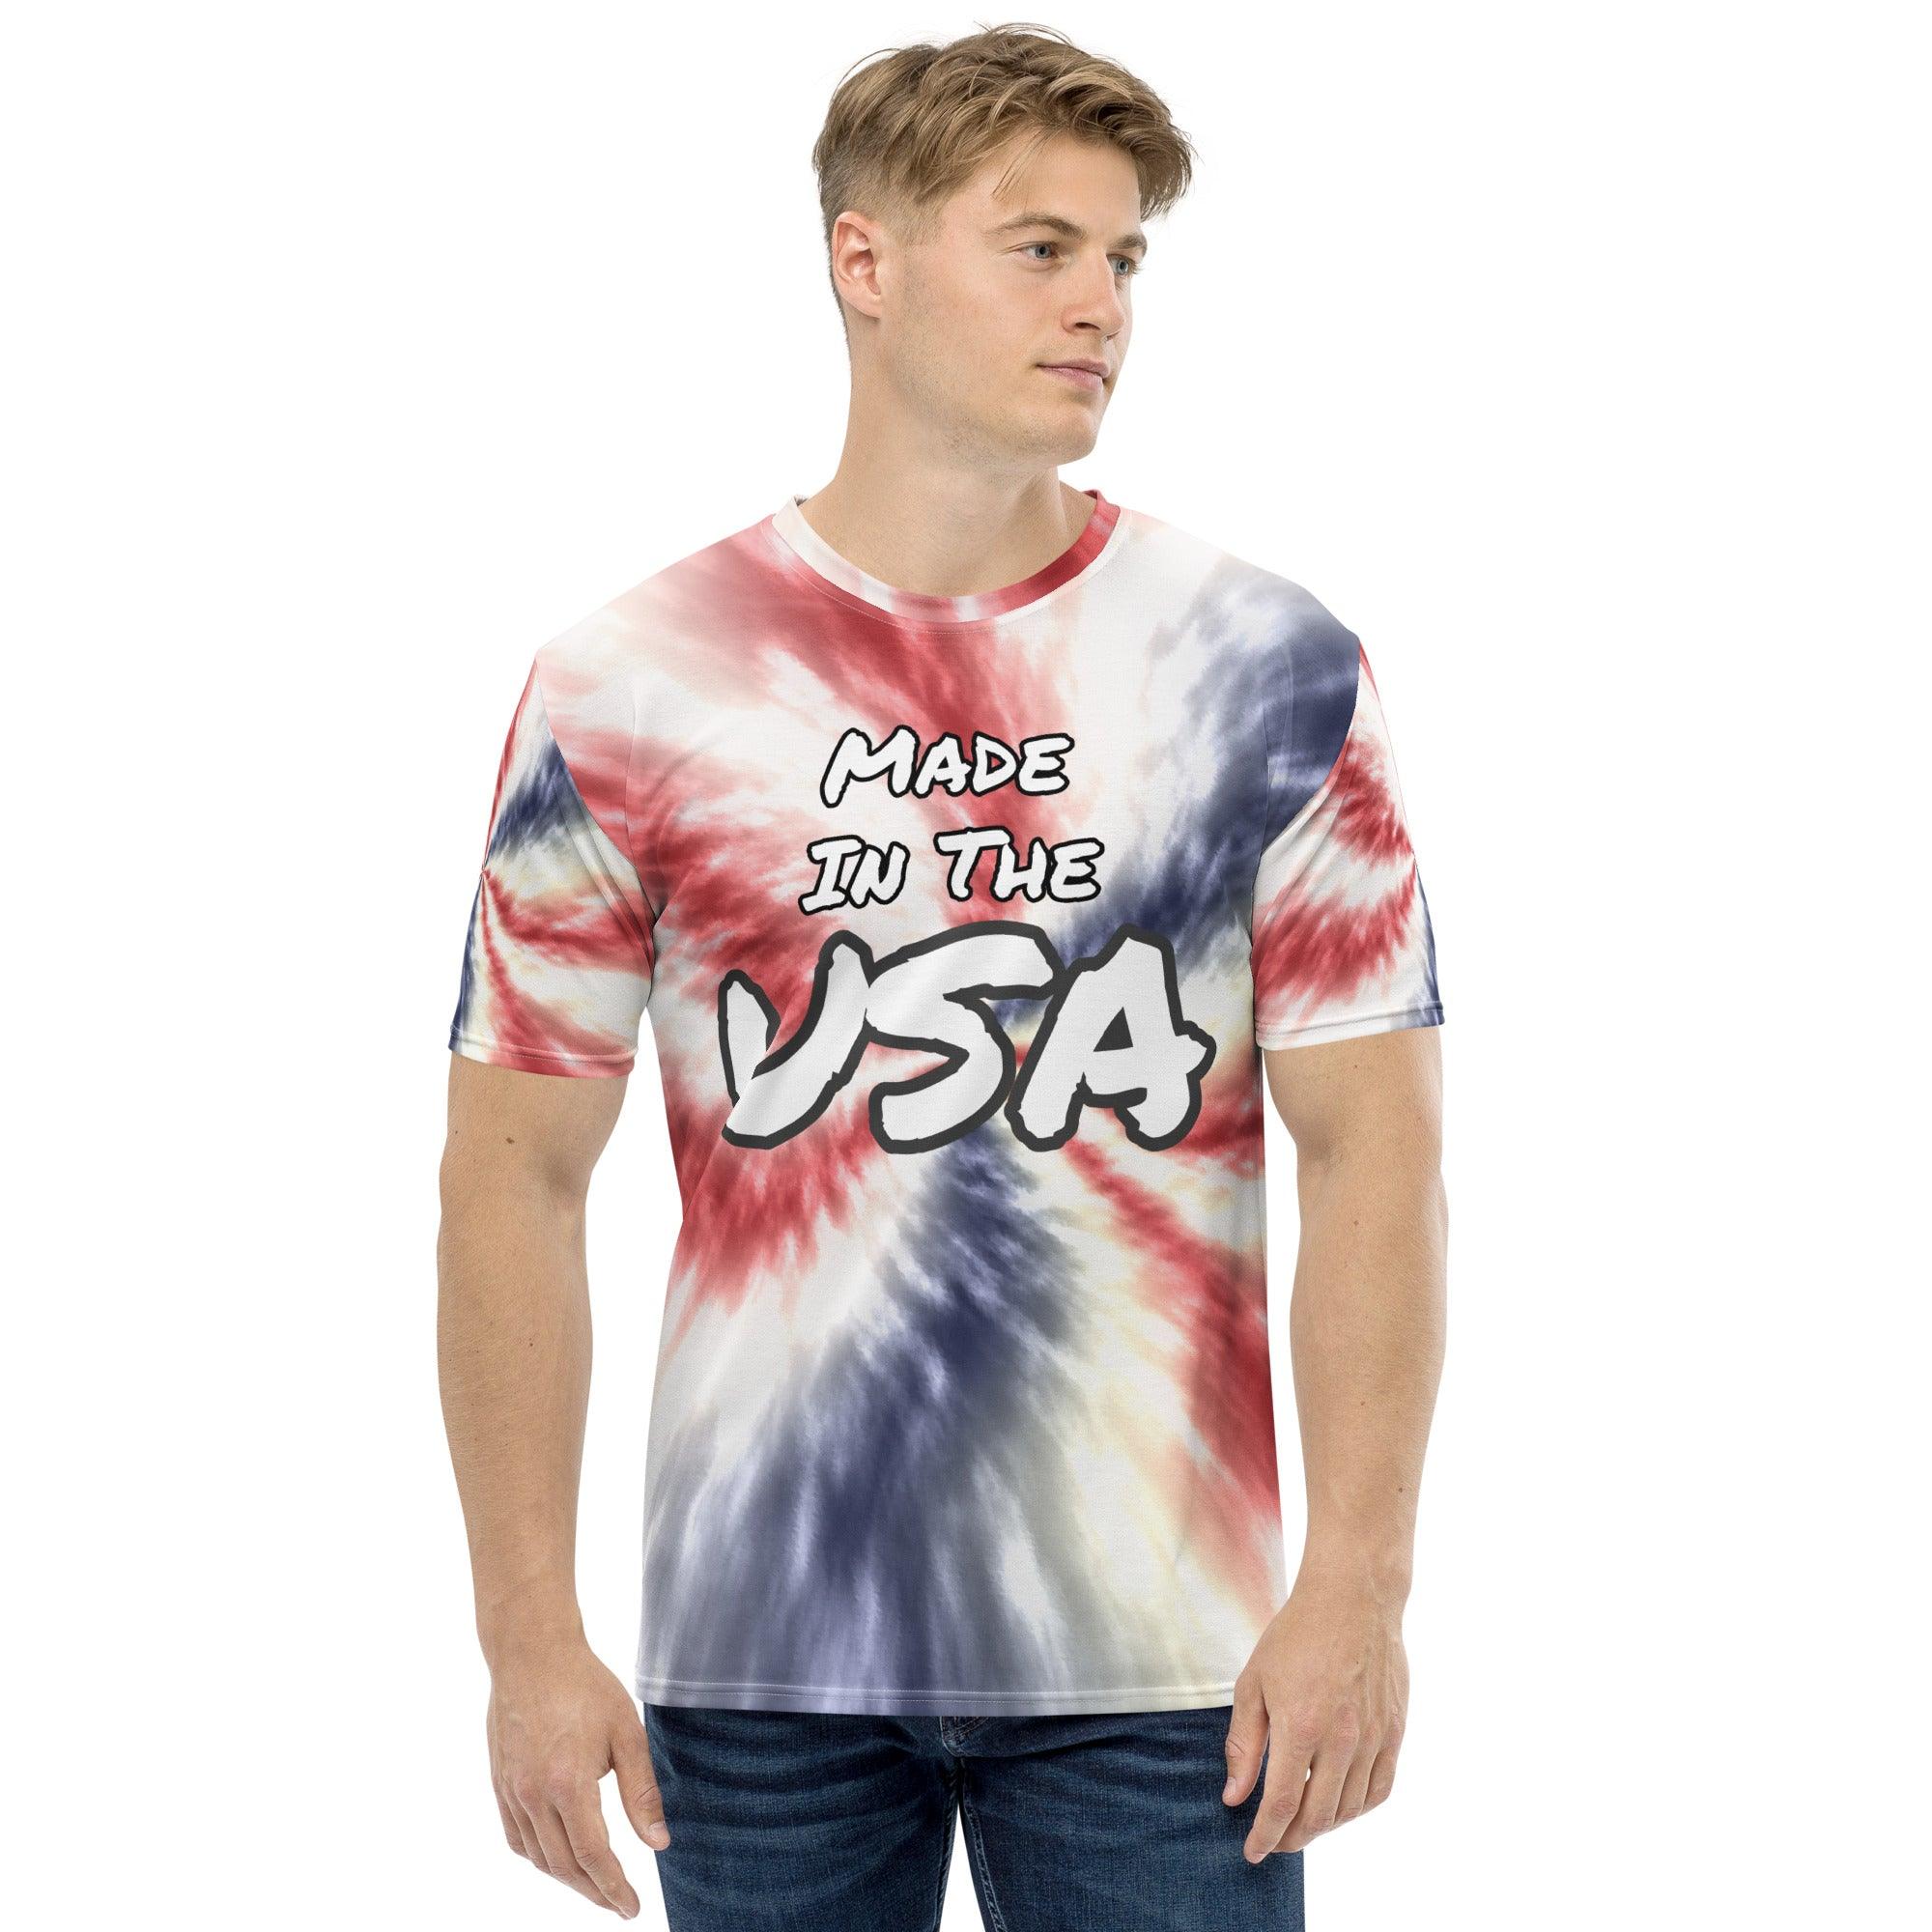 Patriotic T-Shirt Blurred Tie Dye Made In the USA Men's Top - TopKoalaTee